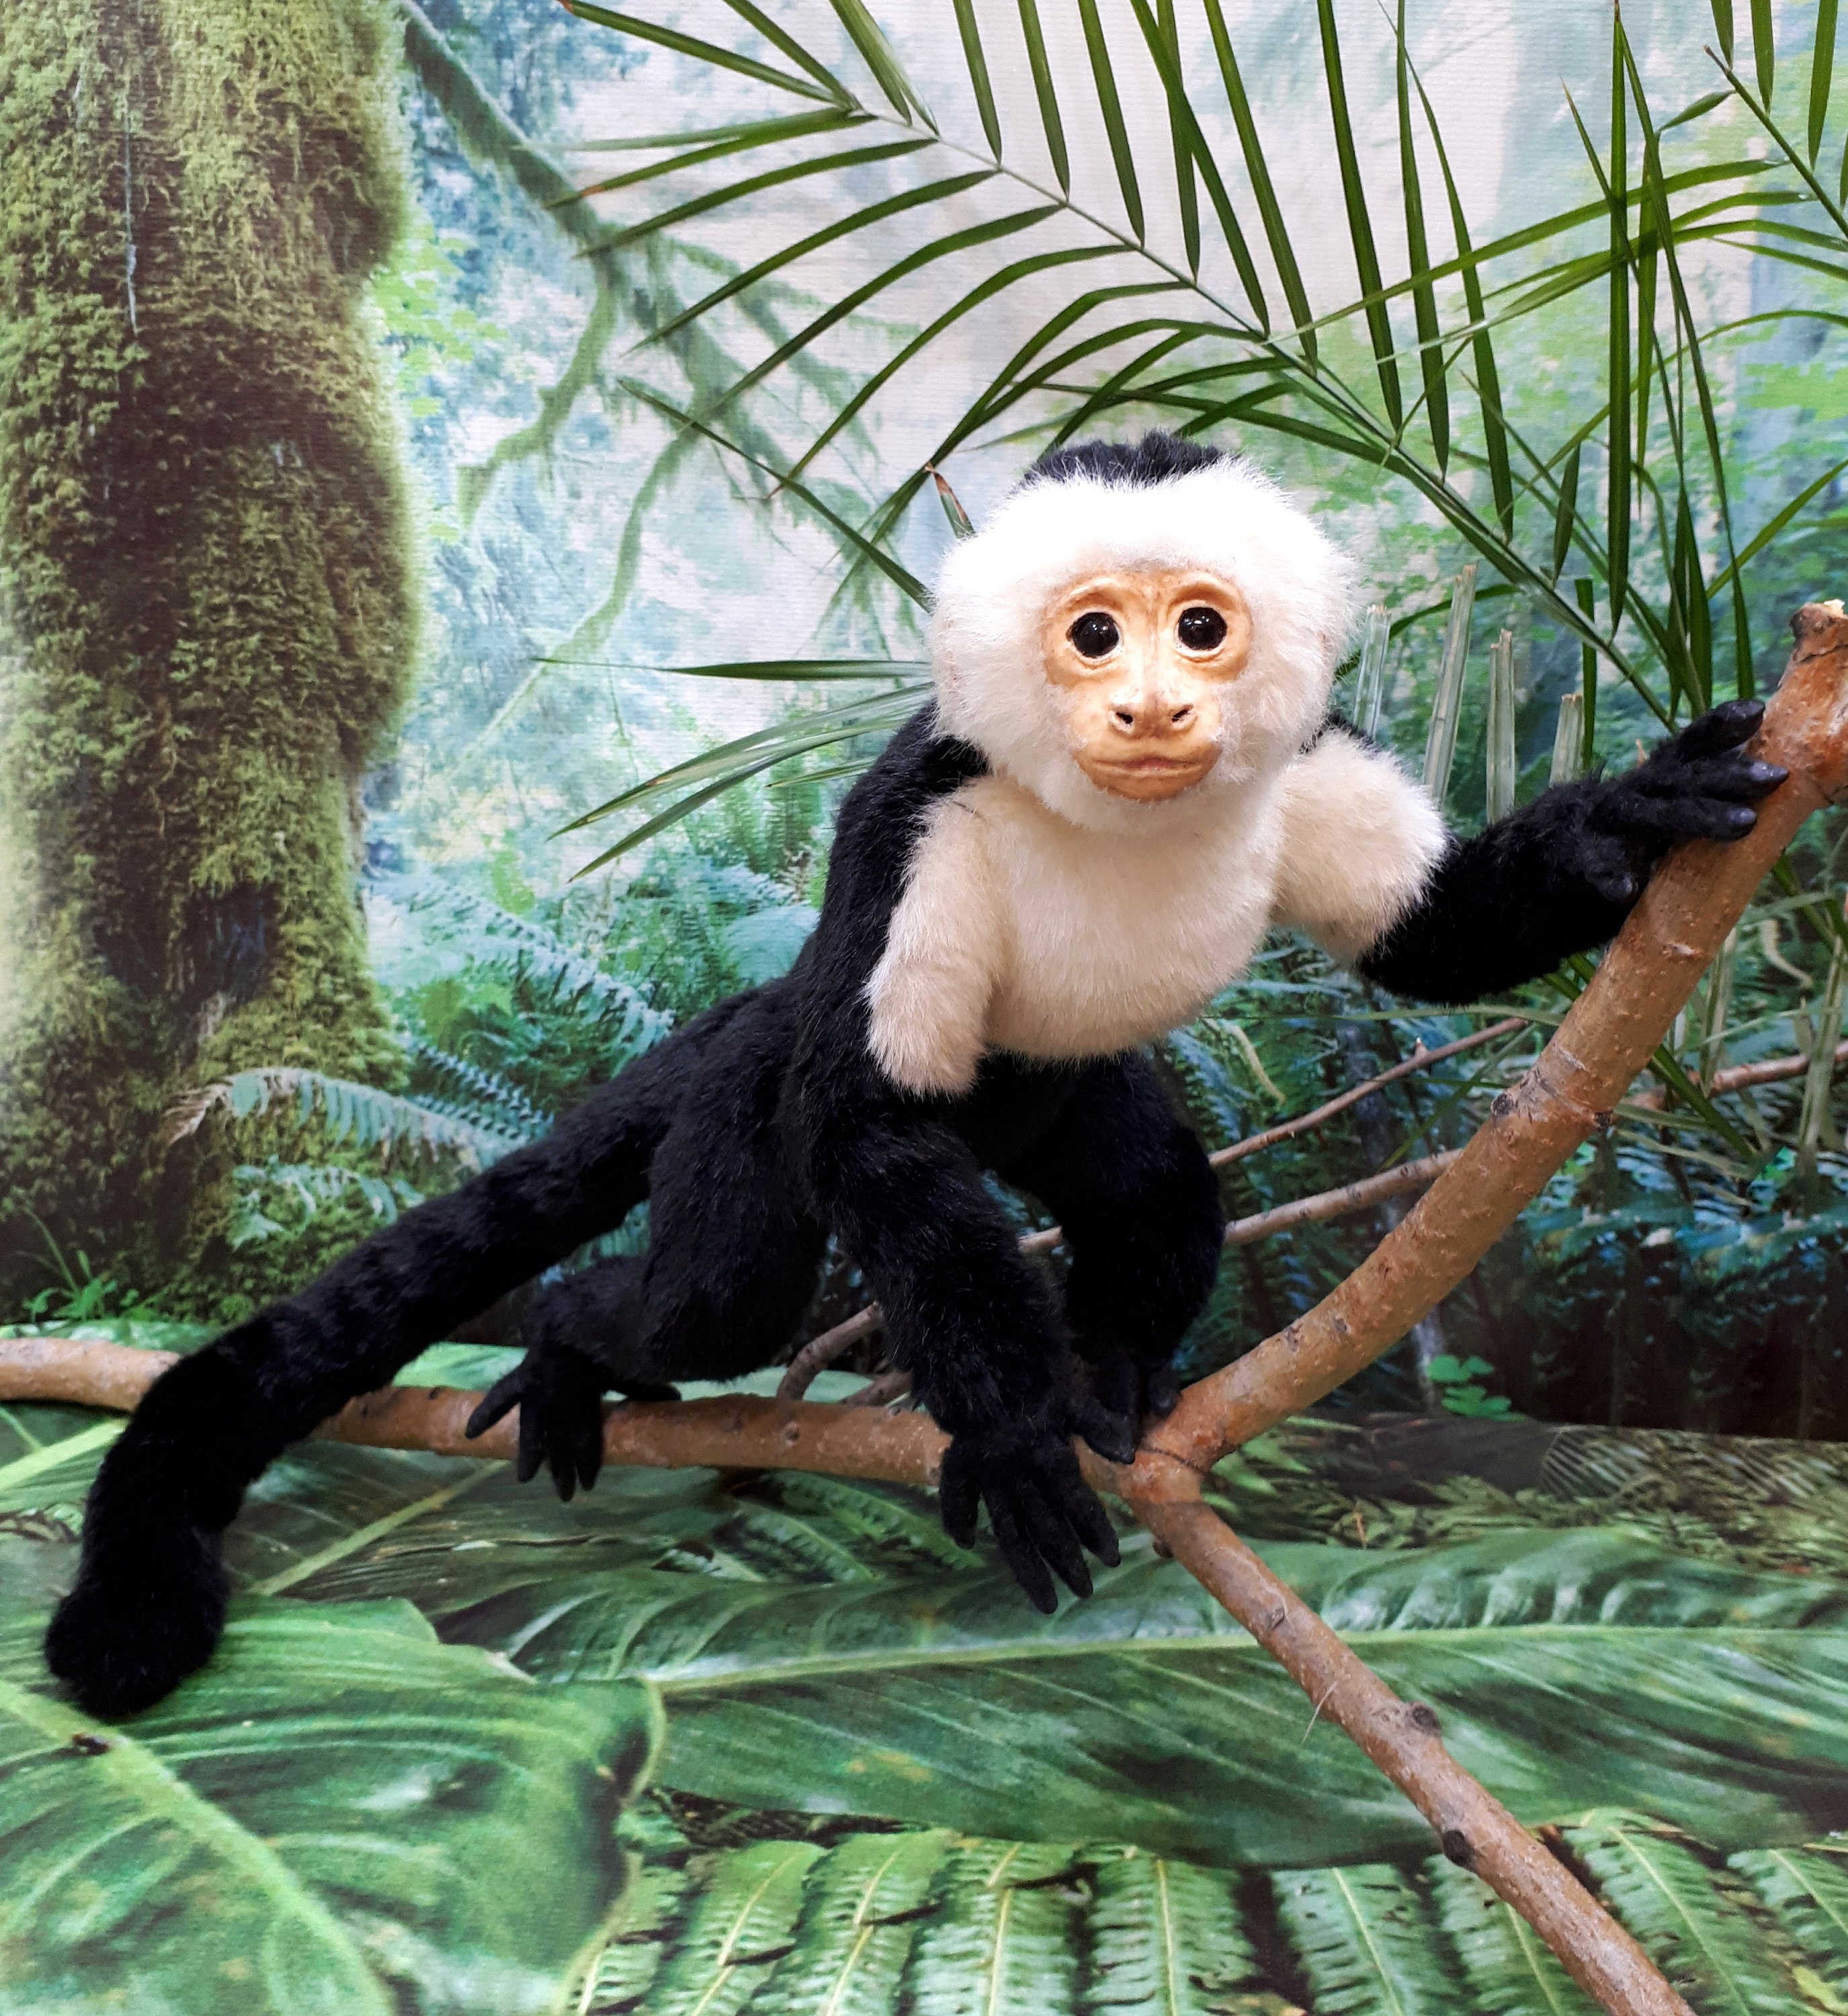 Realistic Toy Stuffed Animal Monkey Baby Monkey Realistic Etsy